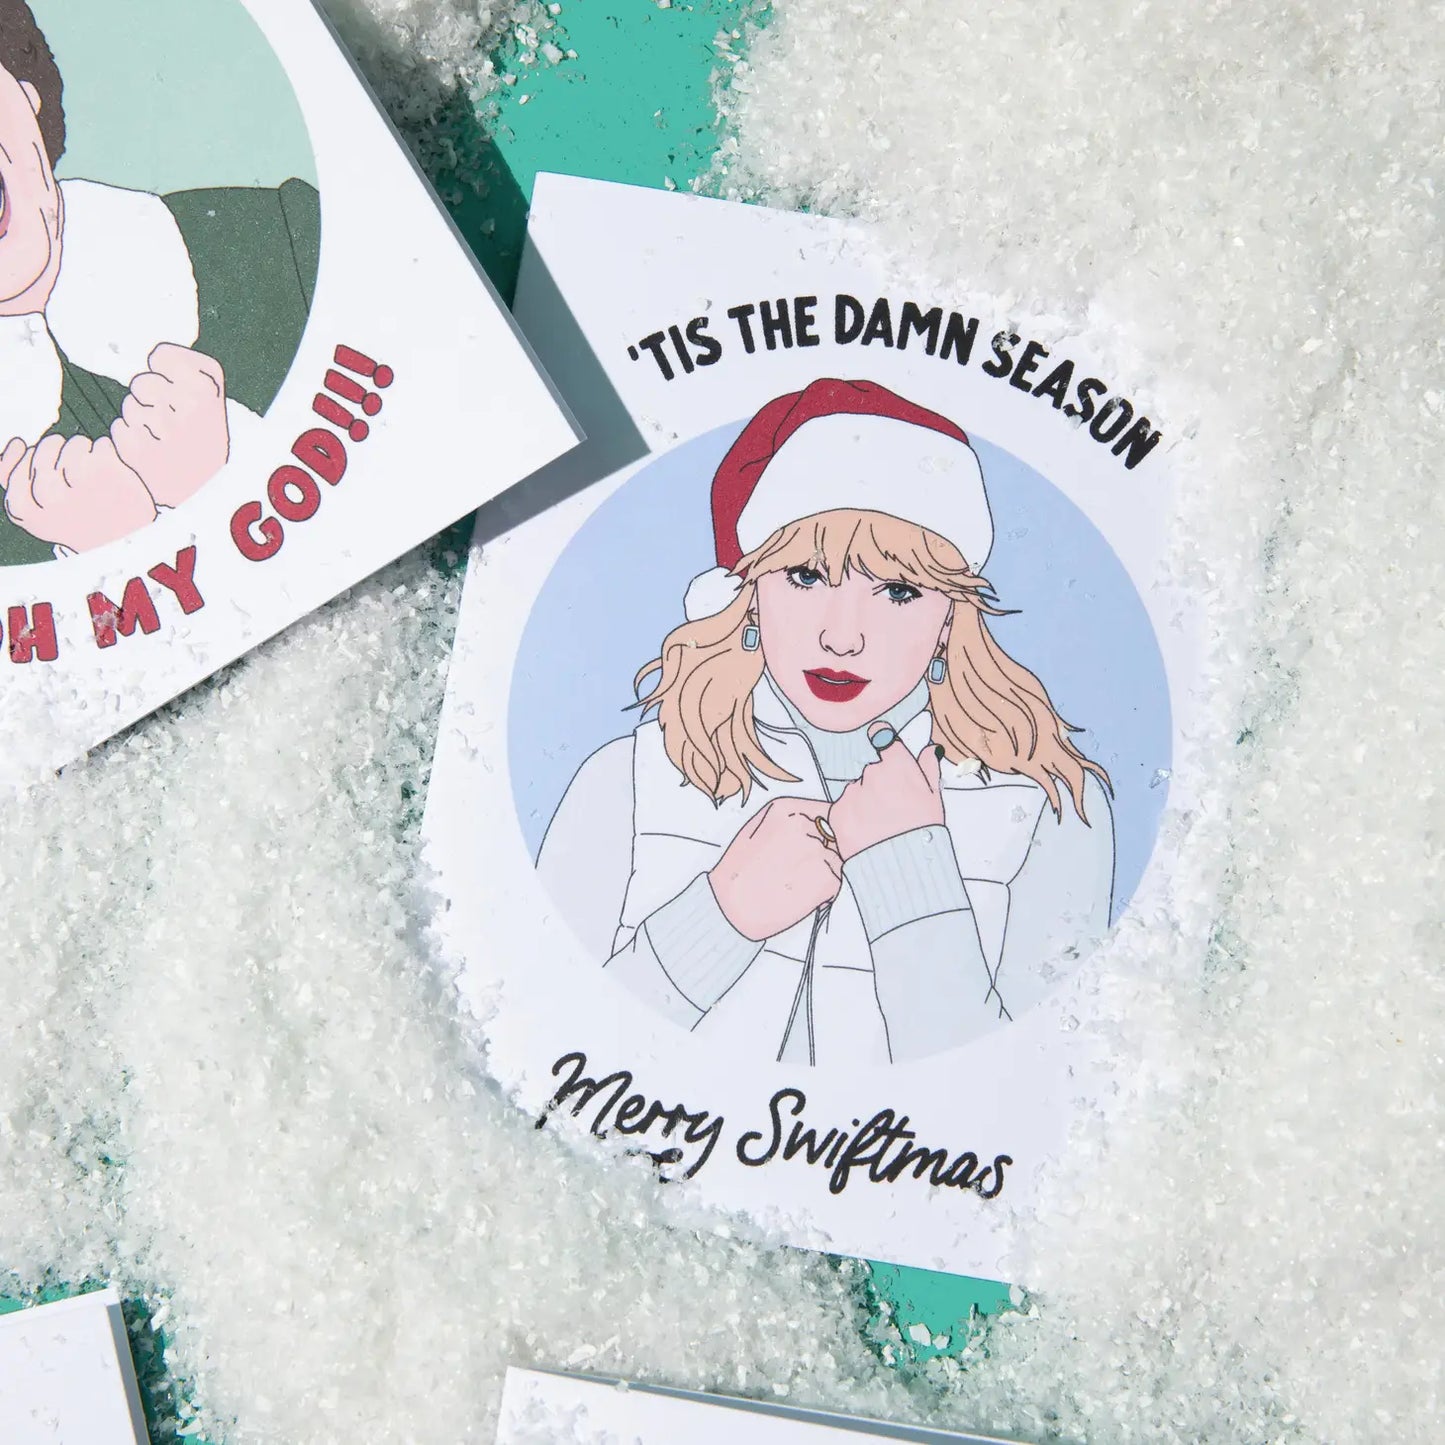 'Tis the Damn Season Taylor Christmas Card